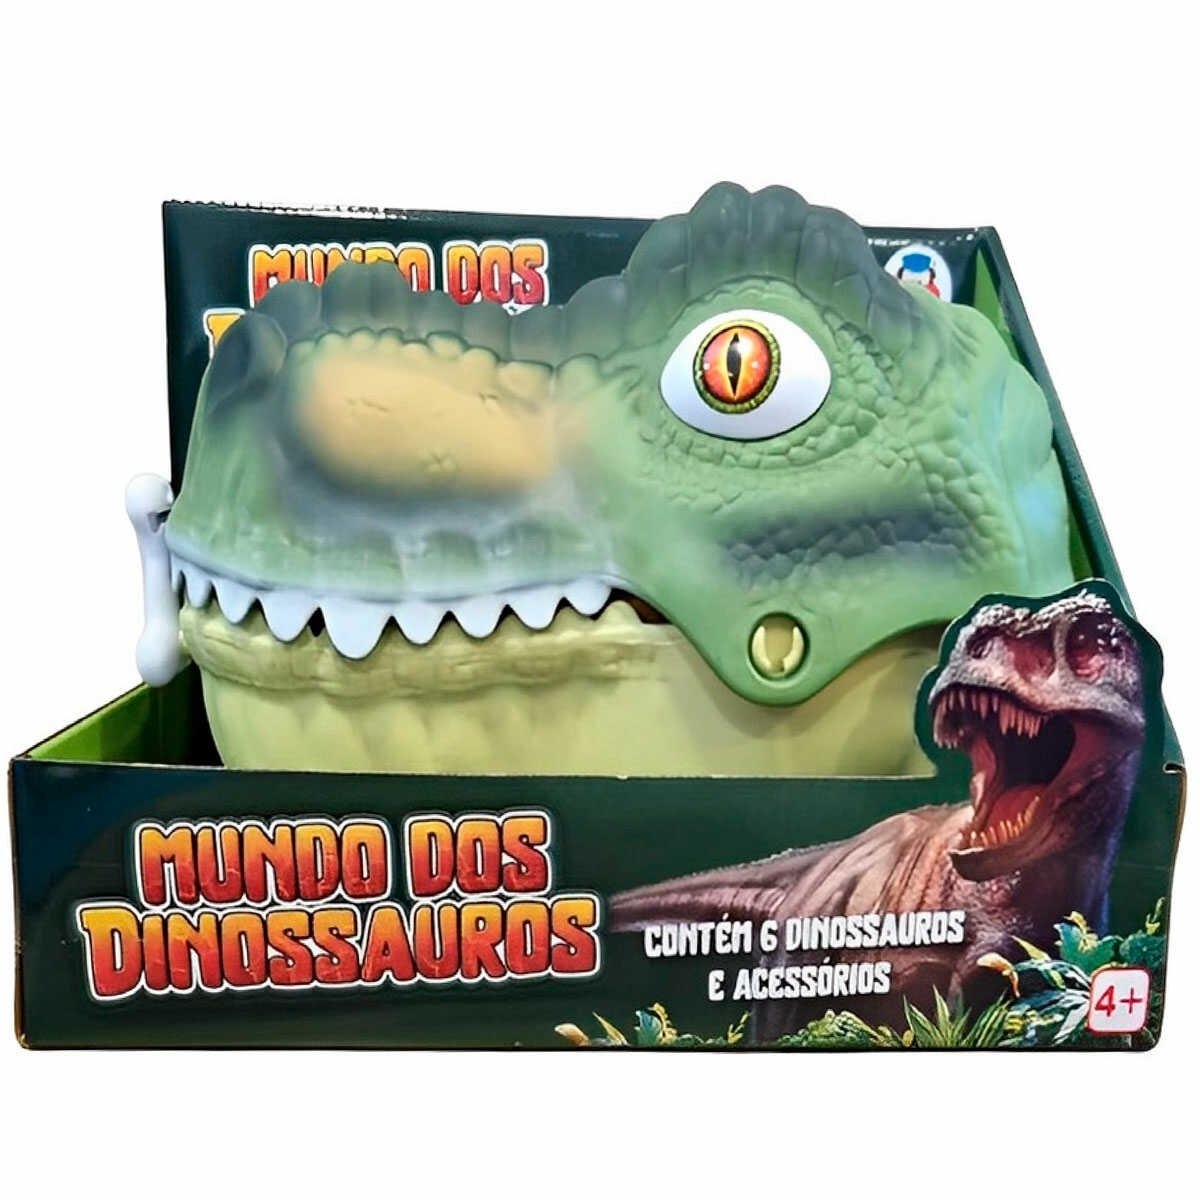 Jogo Dinossauro Game - Braskit - MP Brinquedos